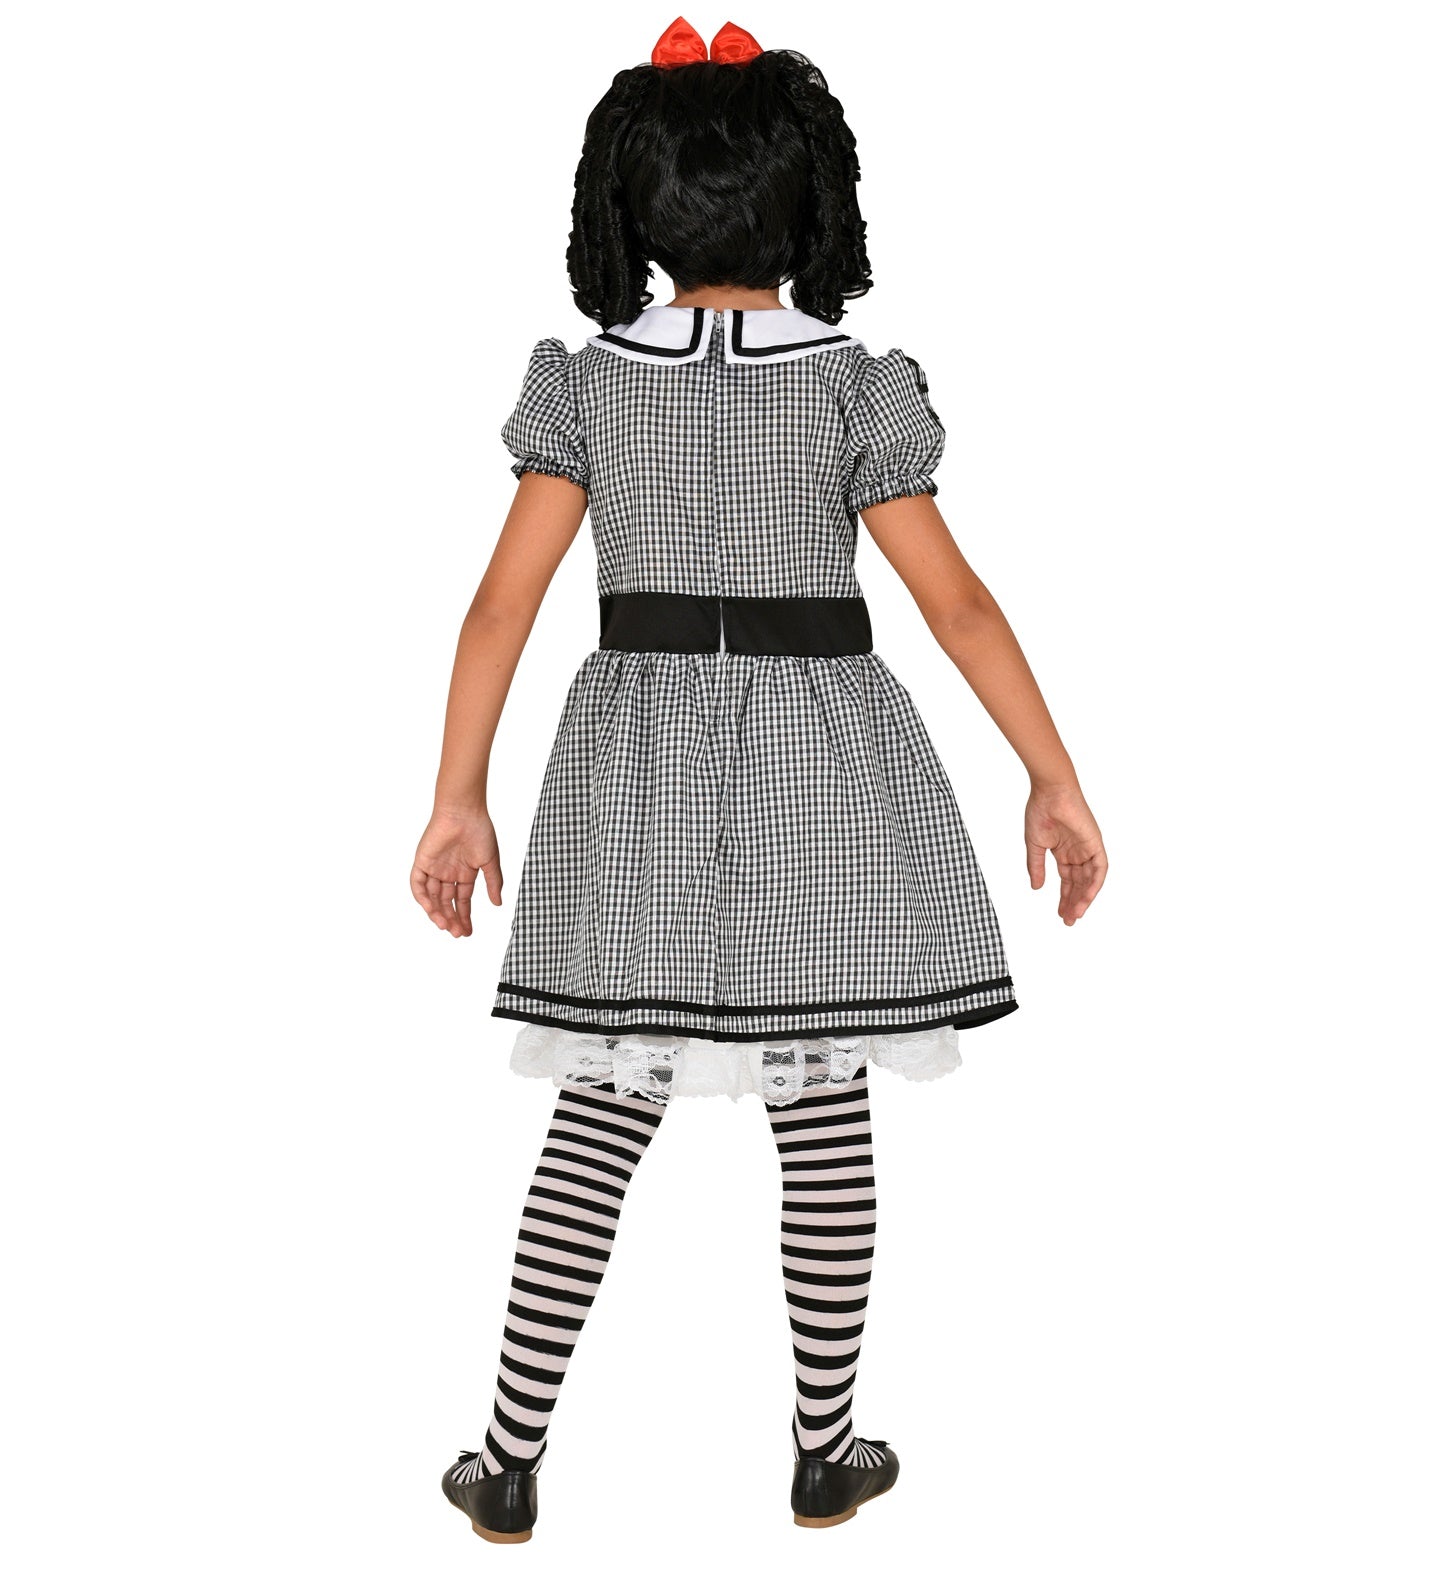 Creepy Doll Girl's Costume rear